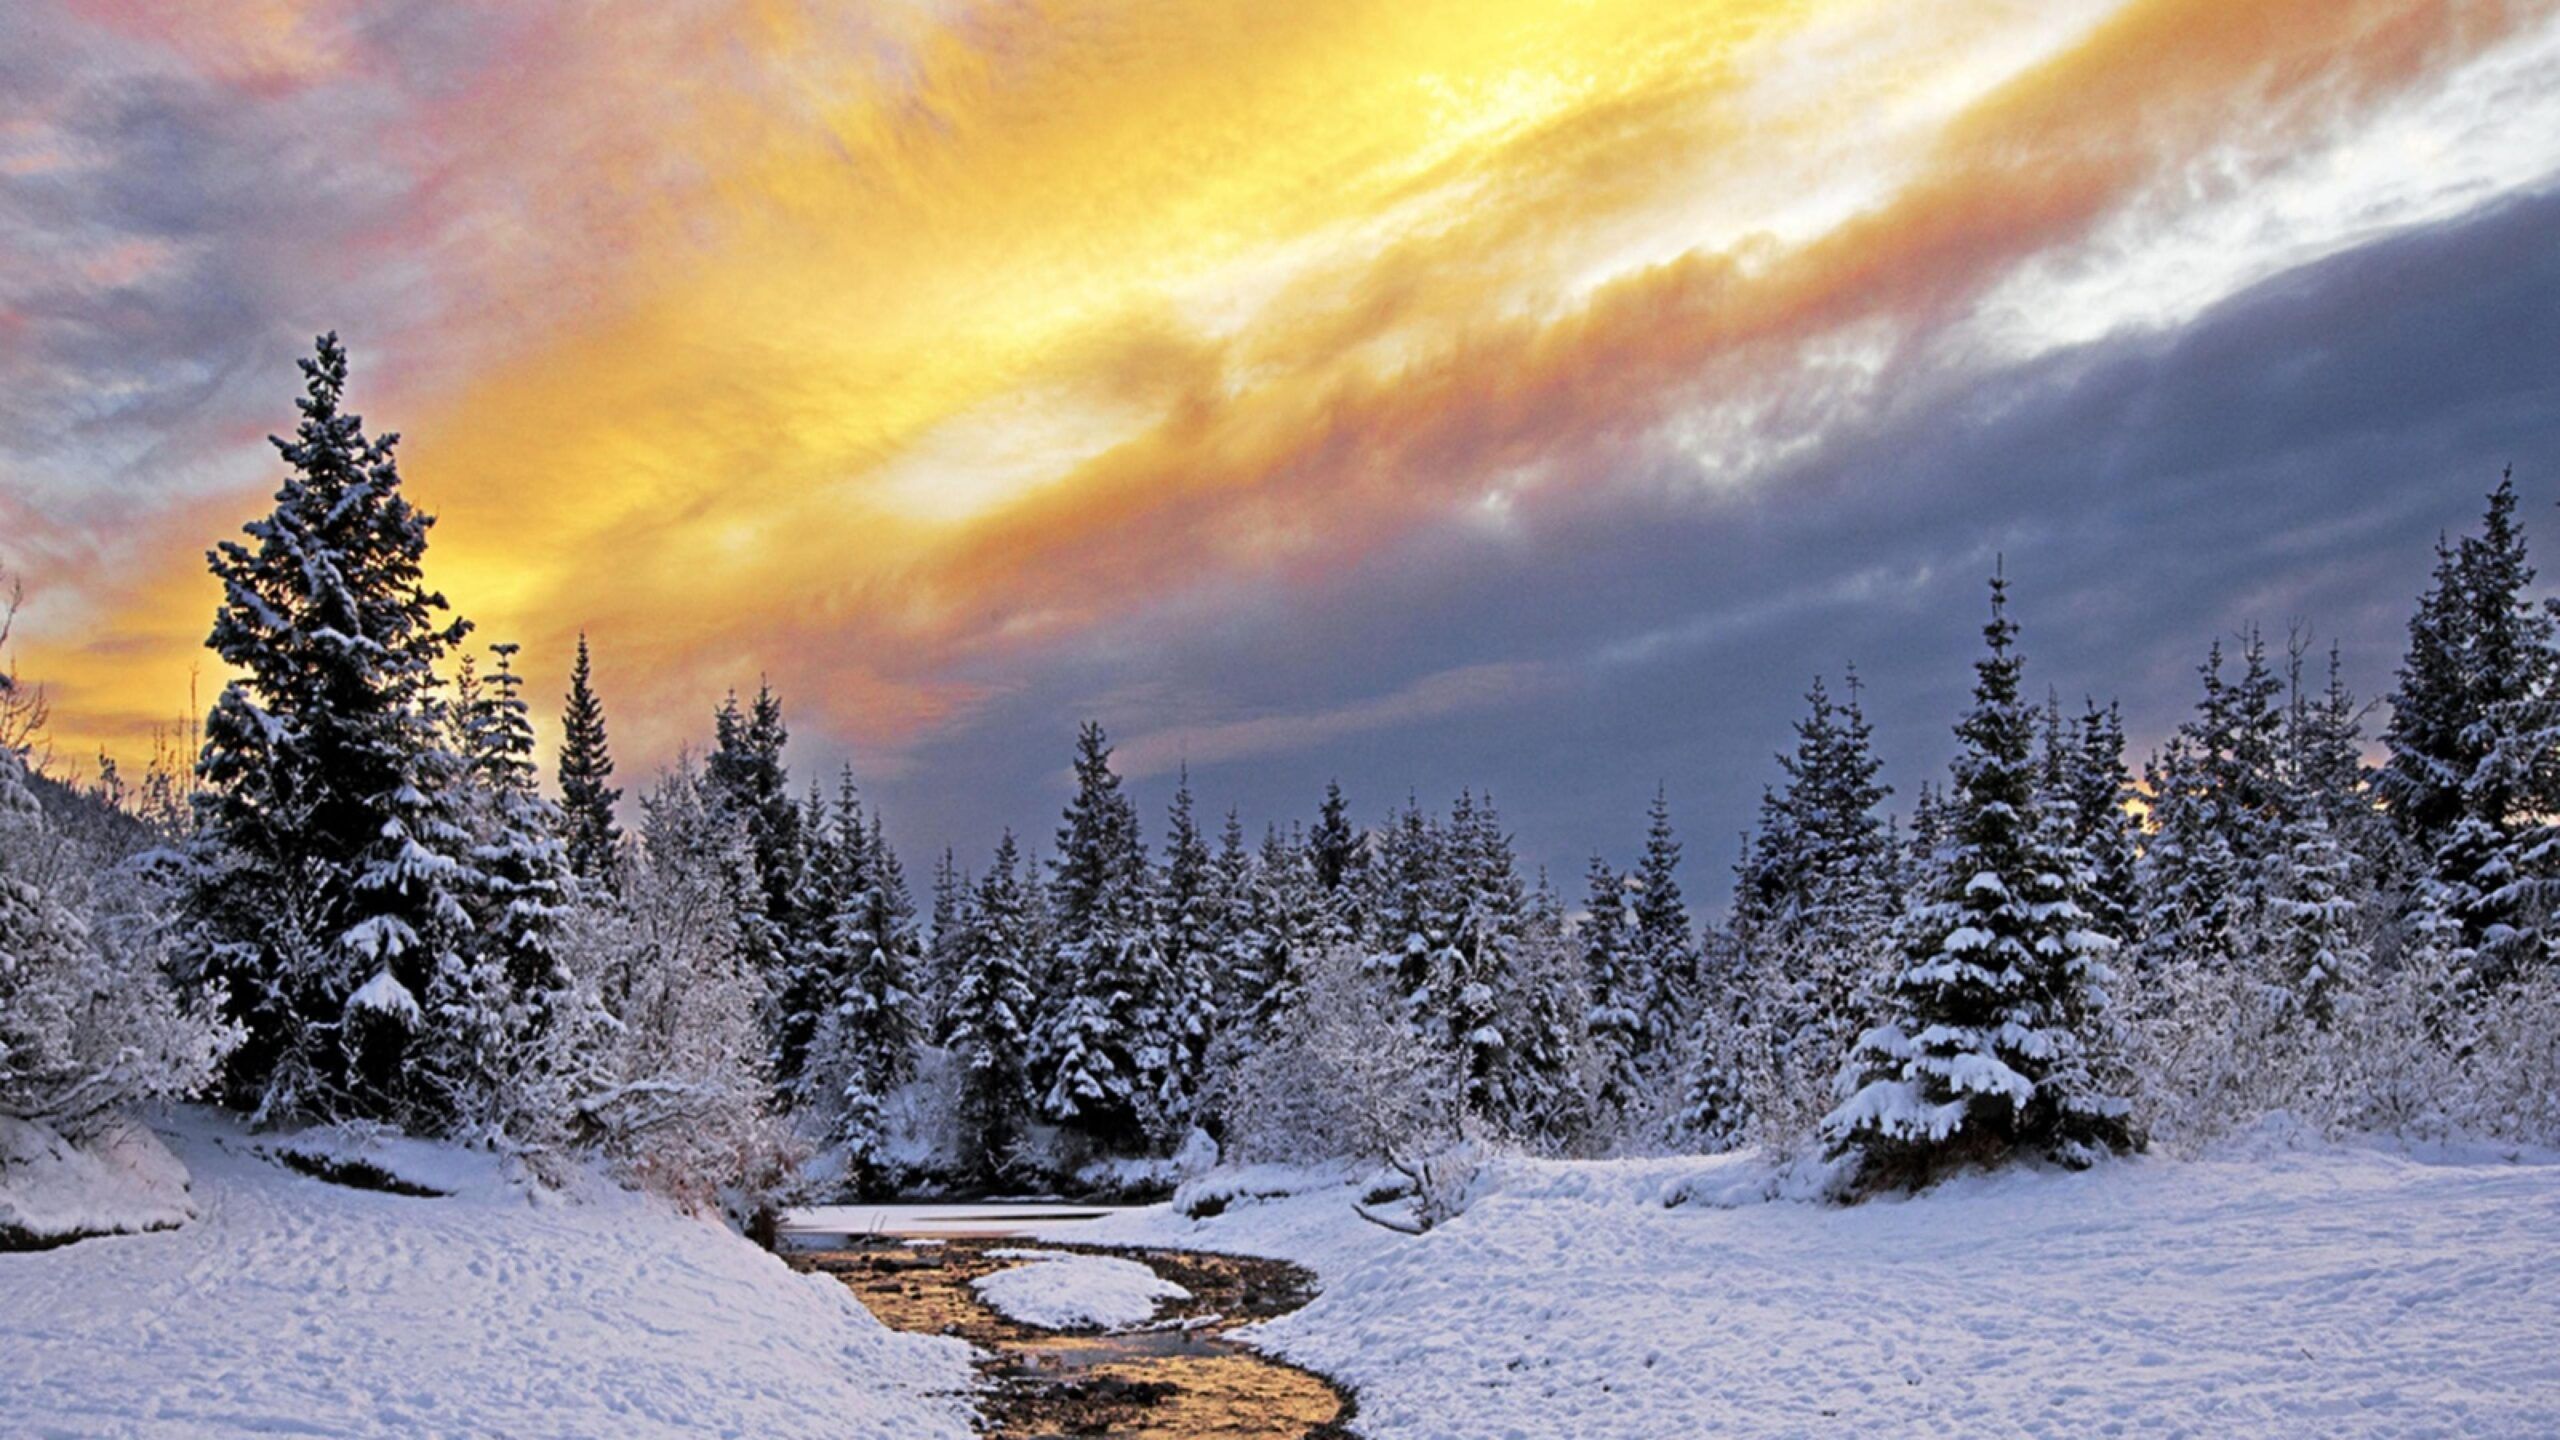 Winter Nature Snow Landscape River Ultra Windows Mac Apple Colourful Amazing Desktop Wallpaper High Definition 4k 3840x2160. Full HD Wallpaper